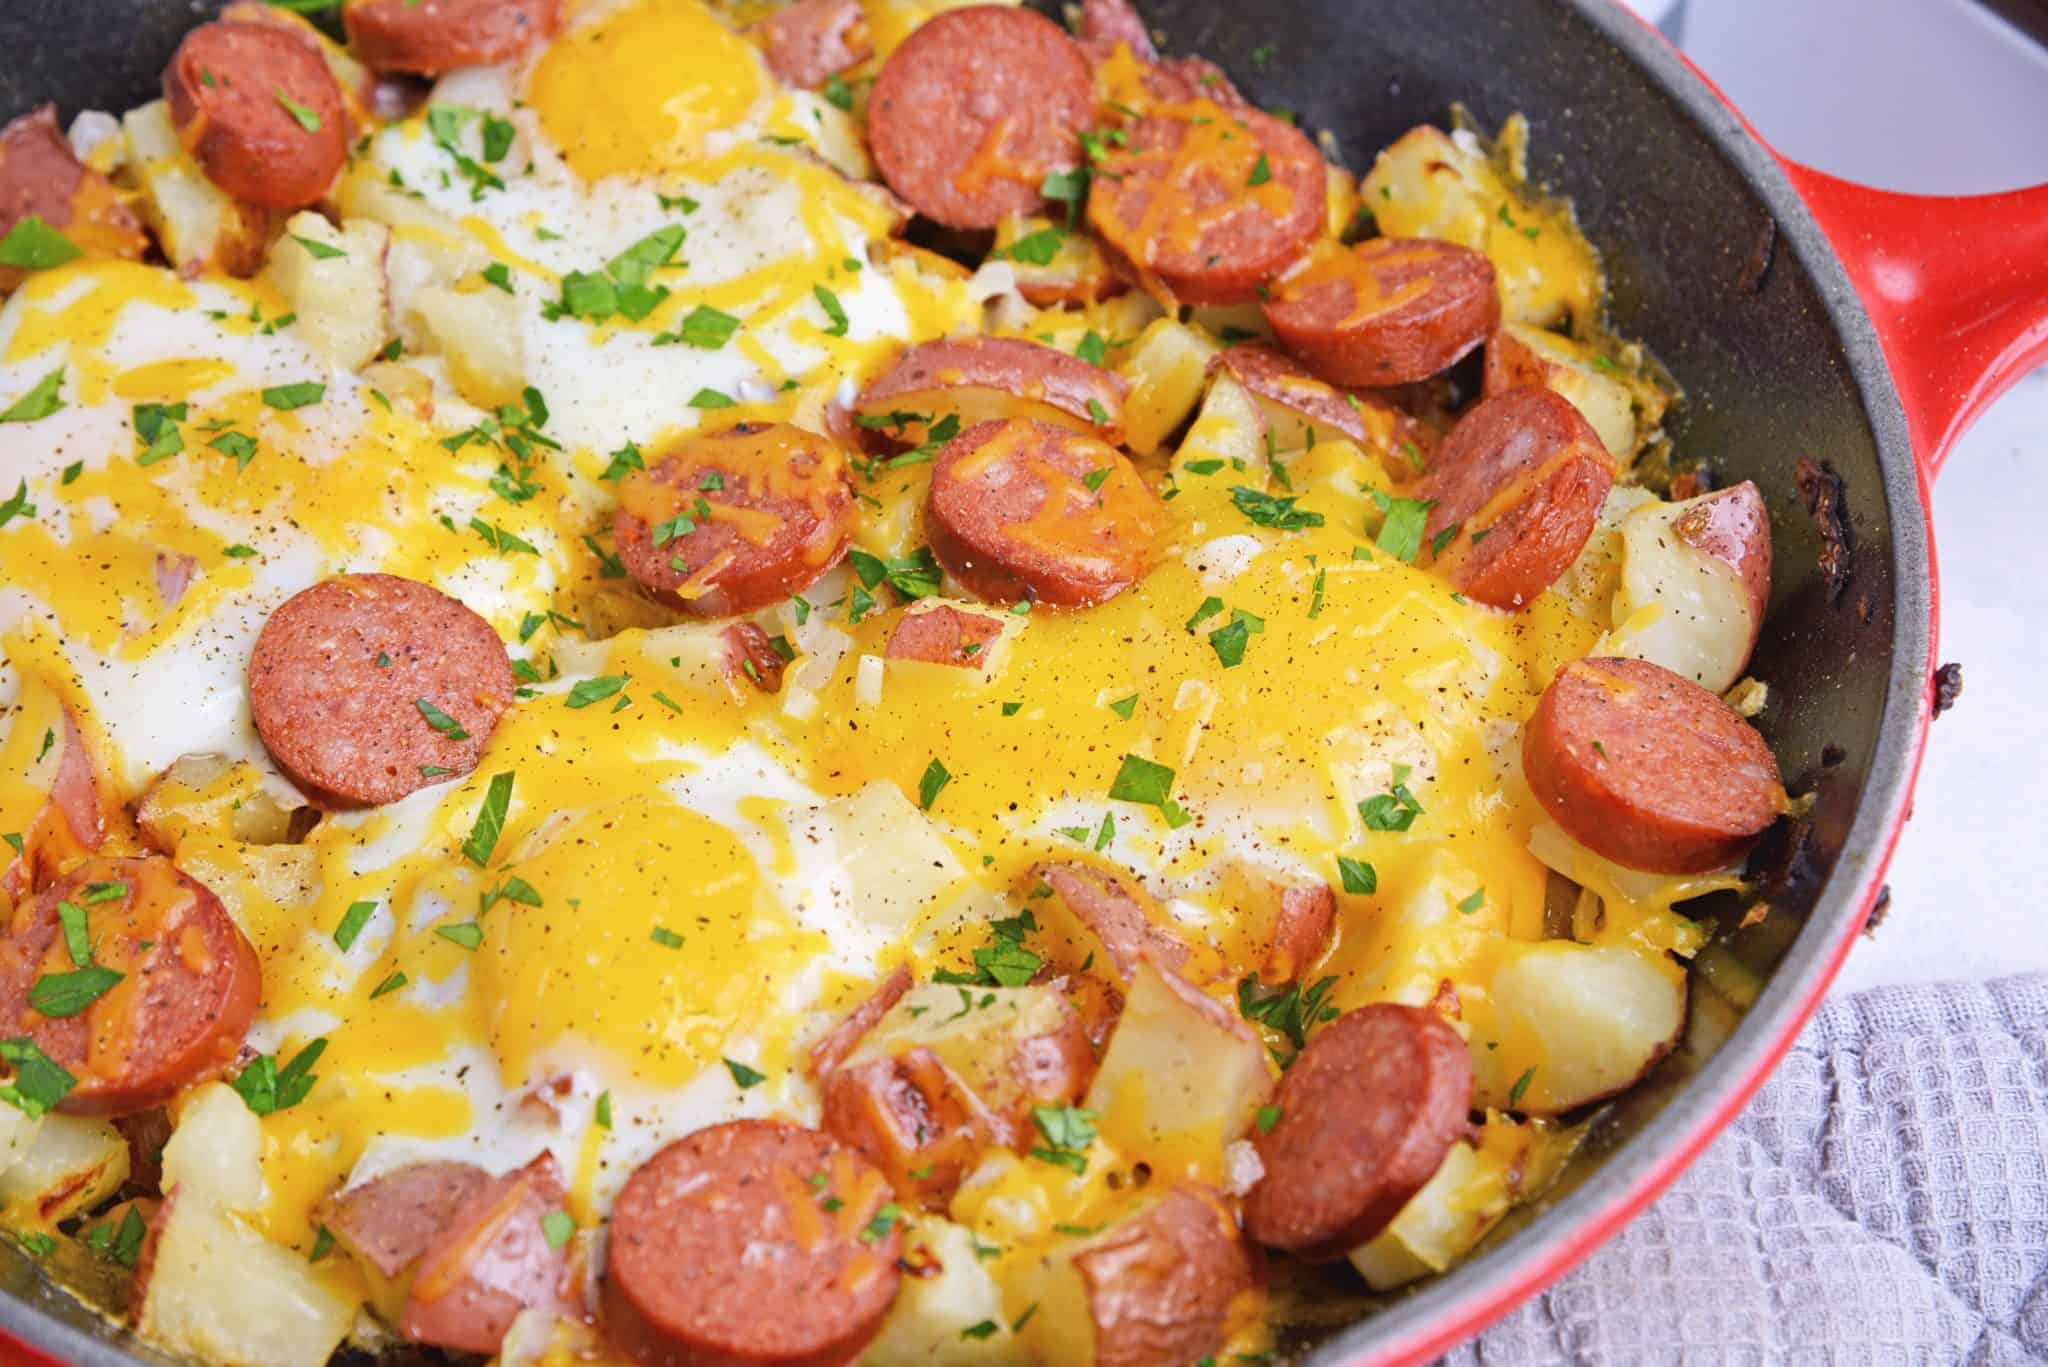 Sausage and Egg Skillet - A Breakfast Skillet Recipe